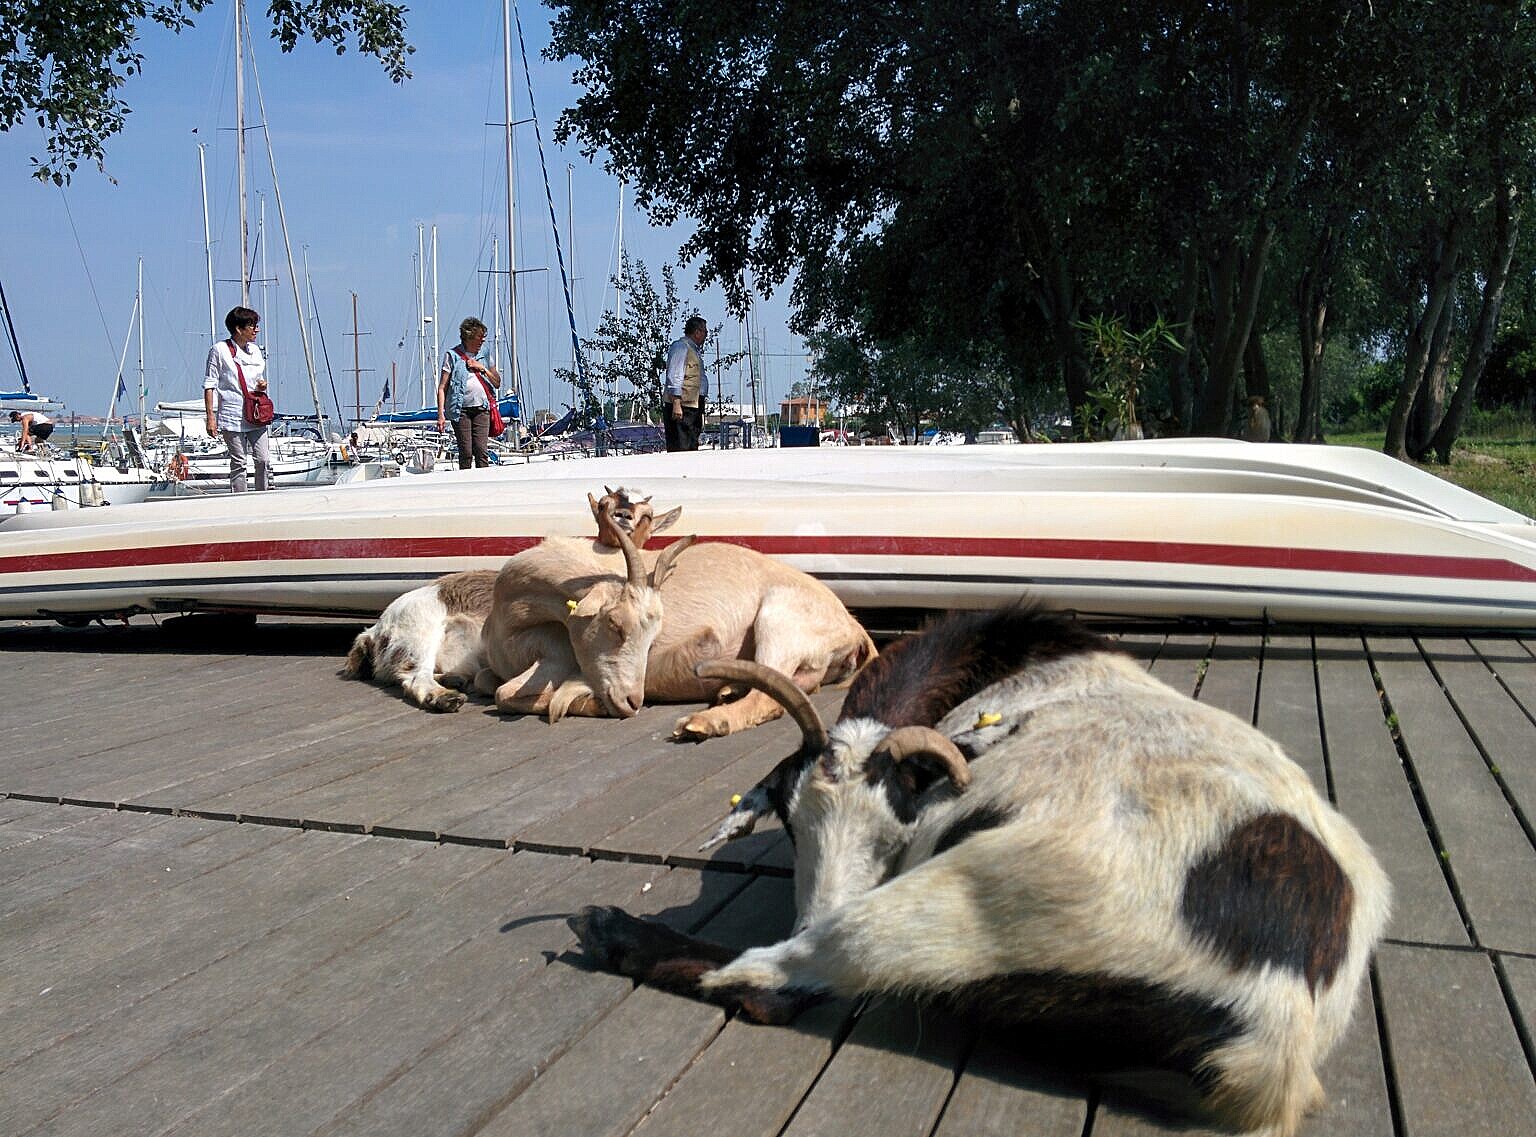 Goats resting between kayaks on the Certosa island